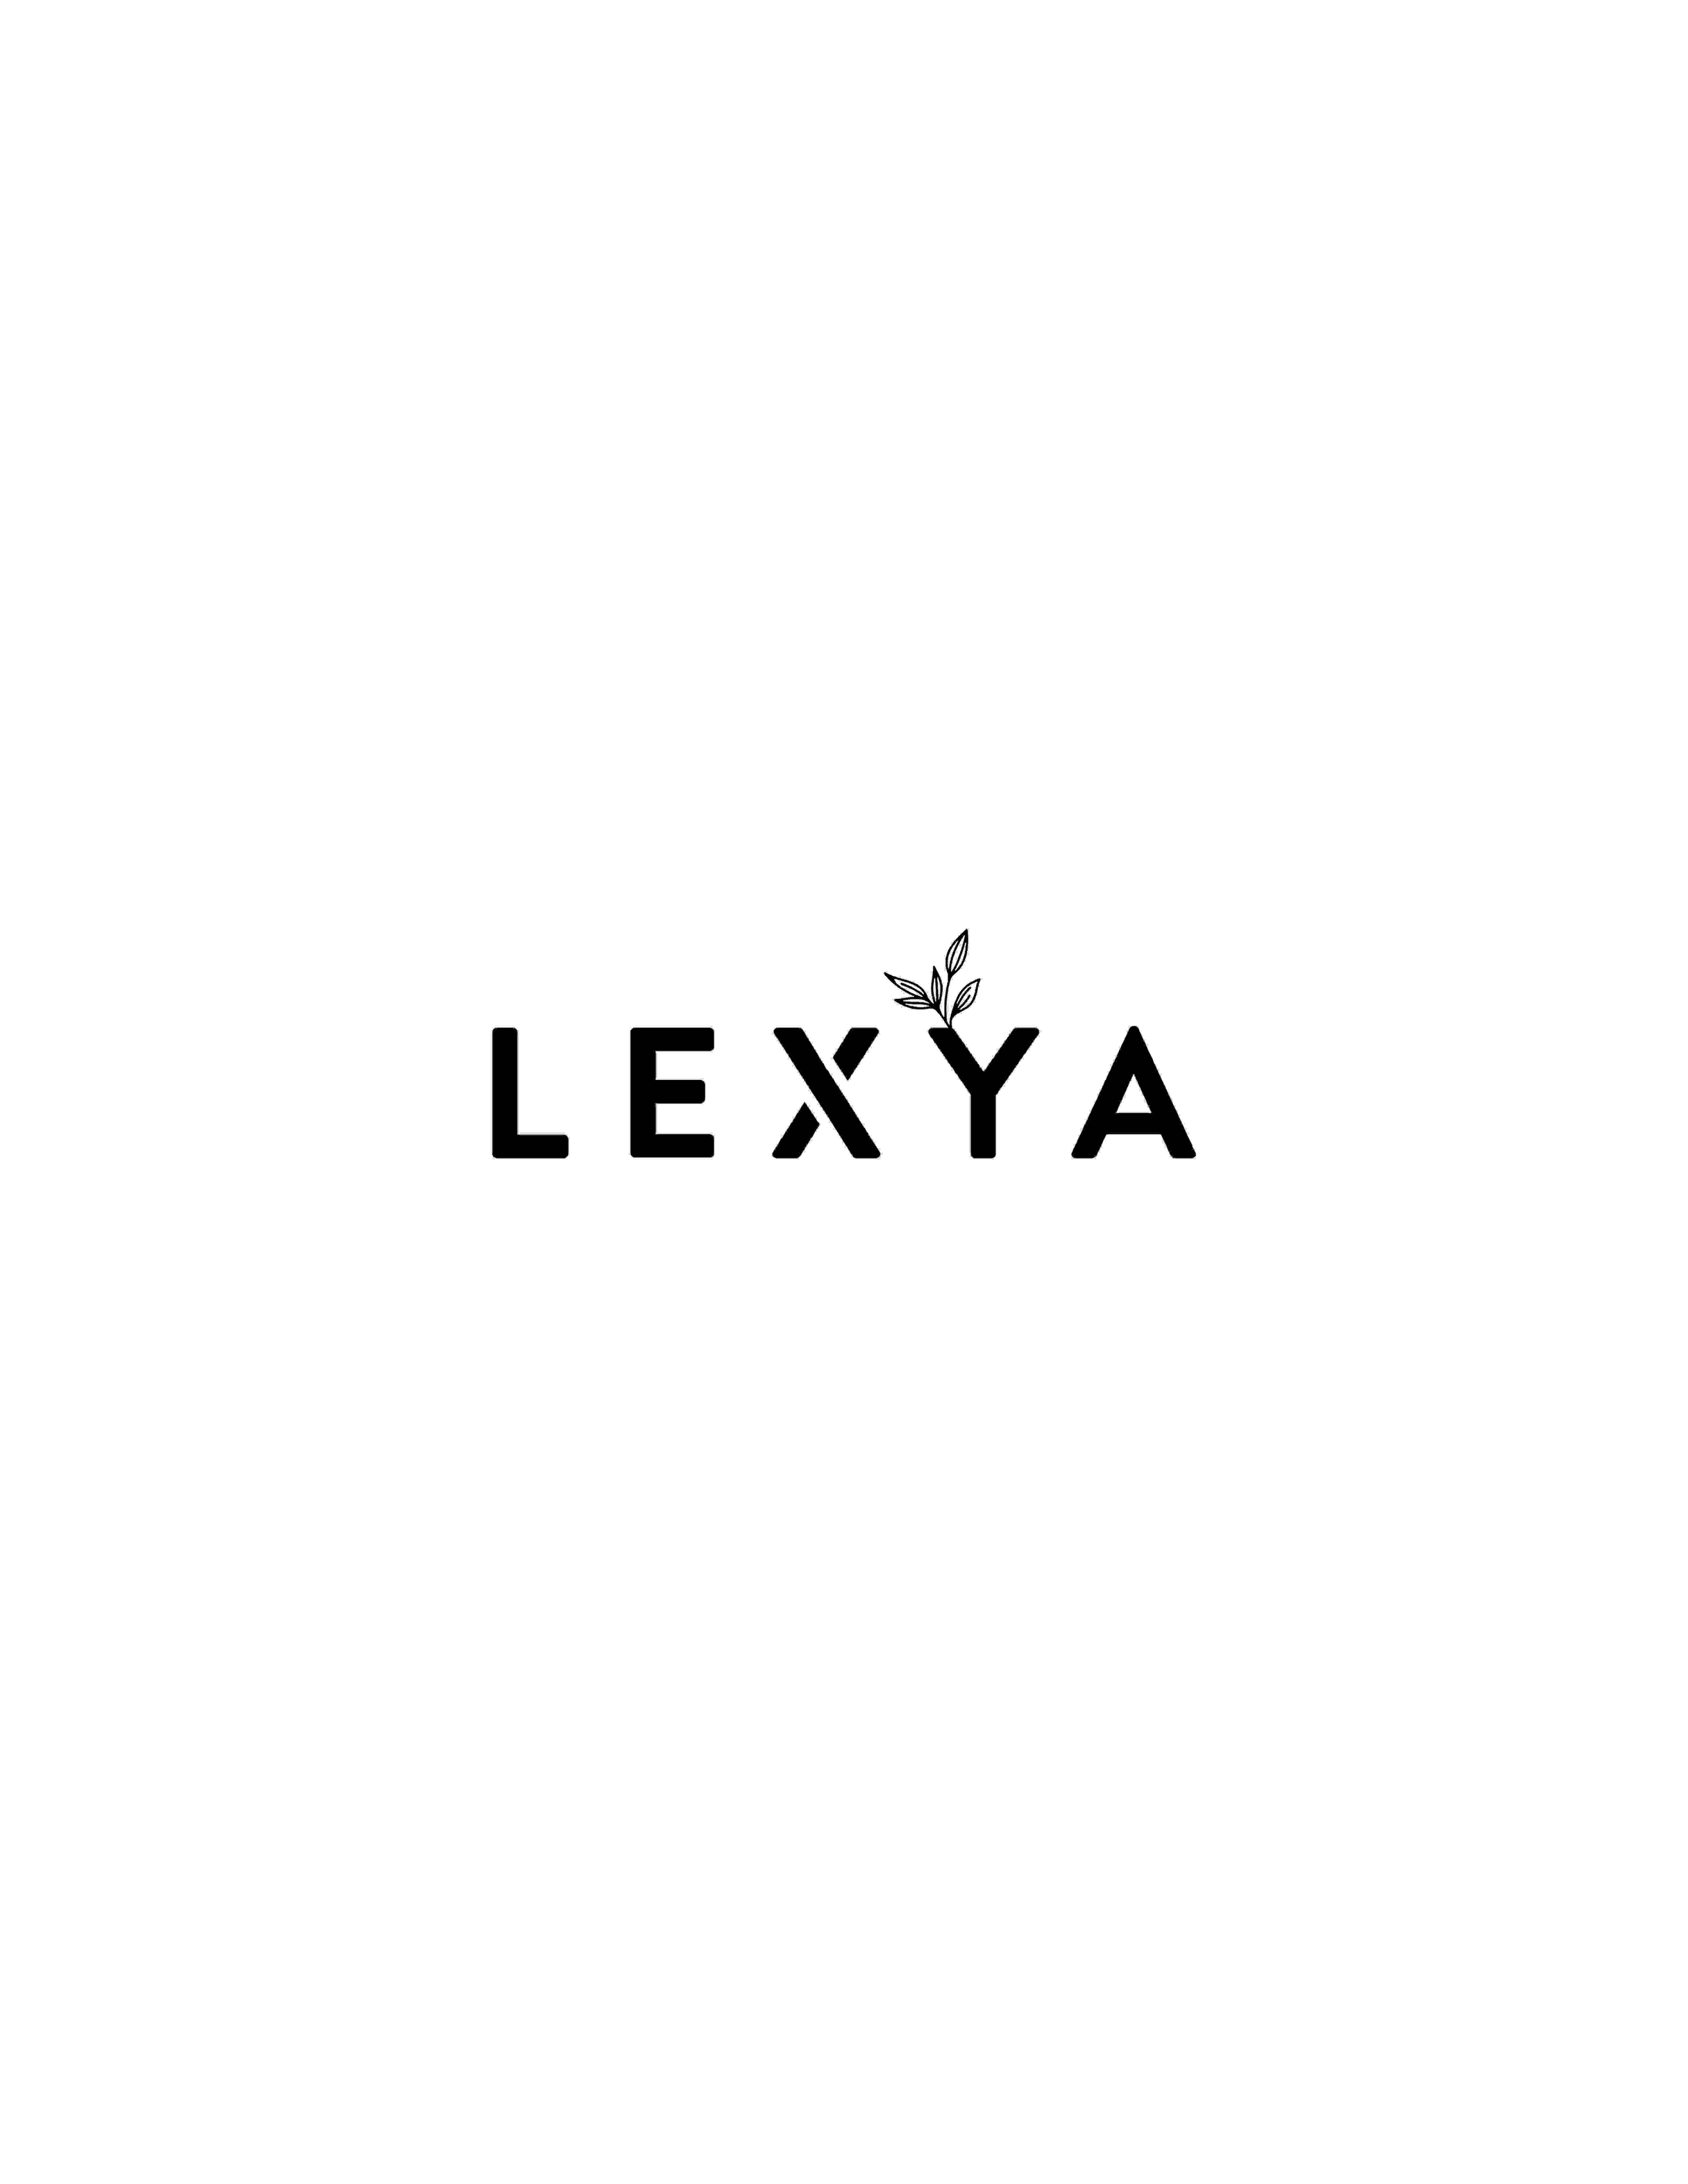 Team Lexya